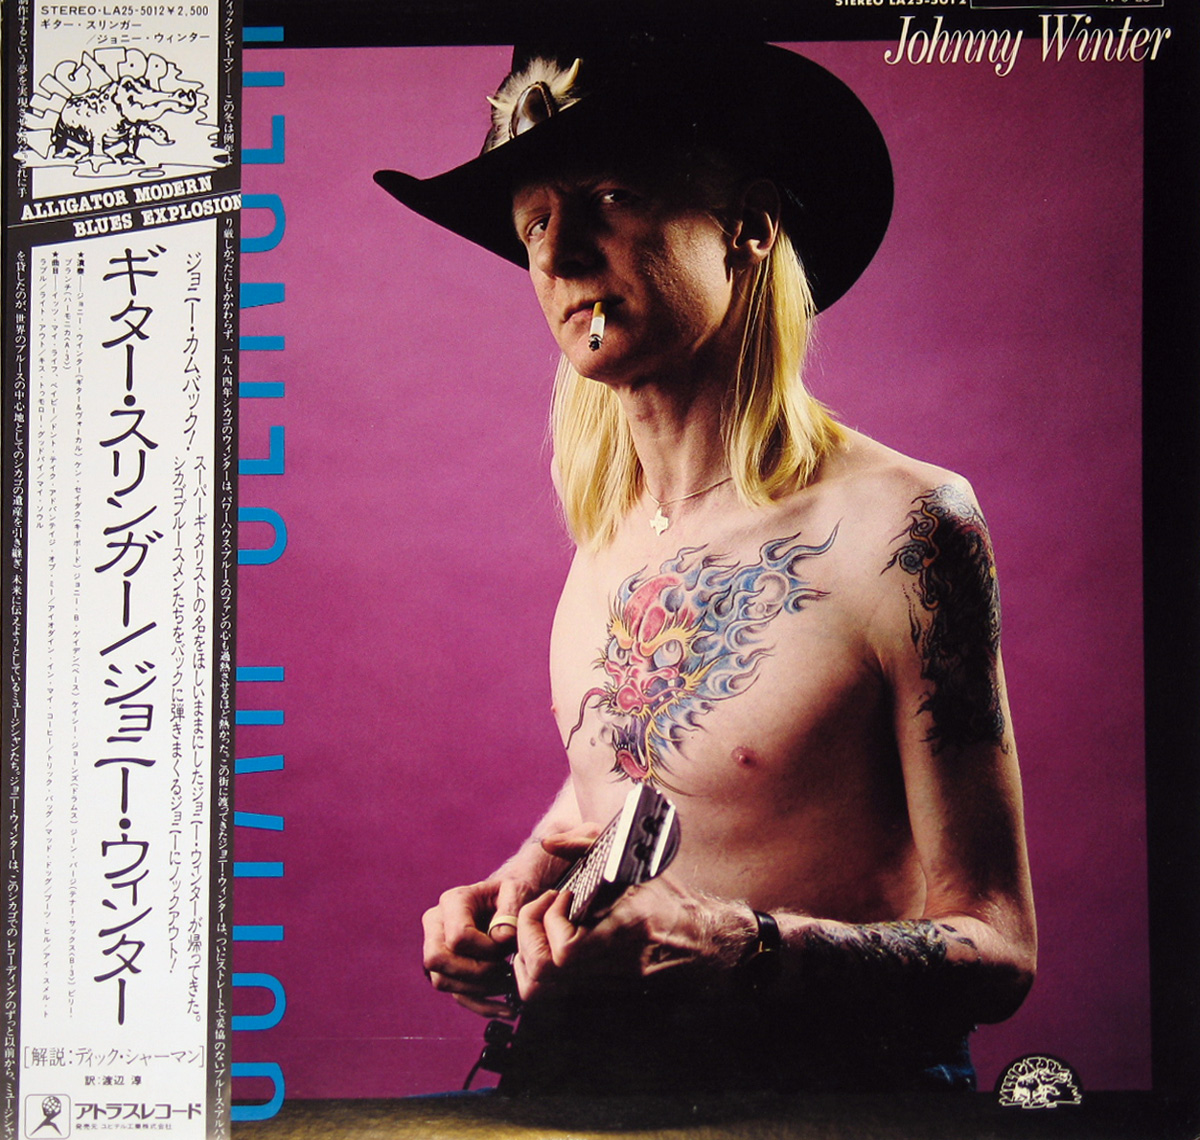 Album Front Cover Photo of JOHNNY WINTER - Guitar Slinger Japanese Release